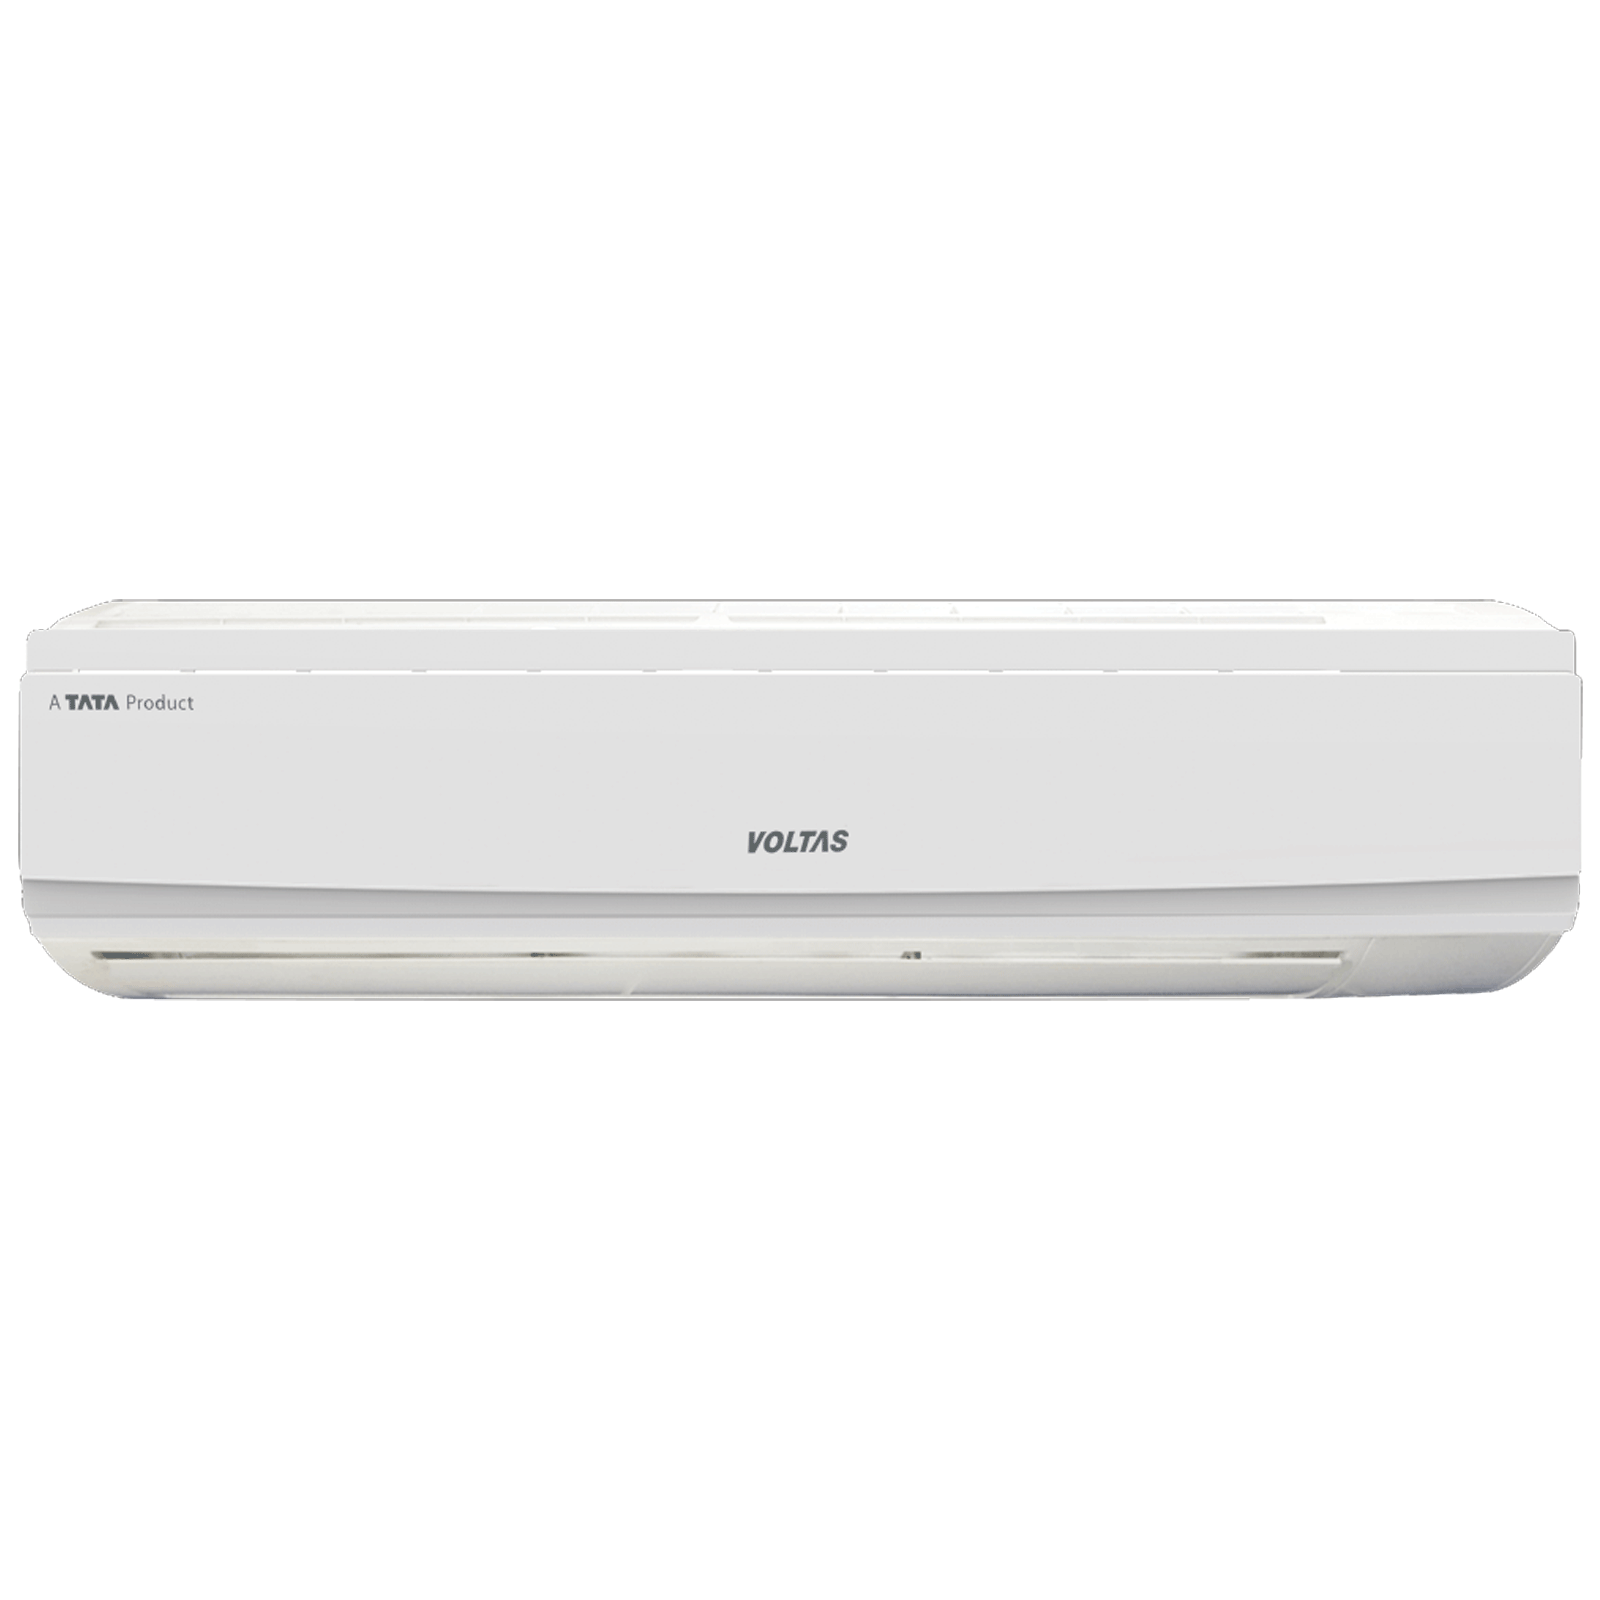 VOLTAS 2.5 Ton 3 Star Inverter Split AC (Eco Friendly Refrigerant, SAC 303V AD, White)_1